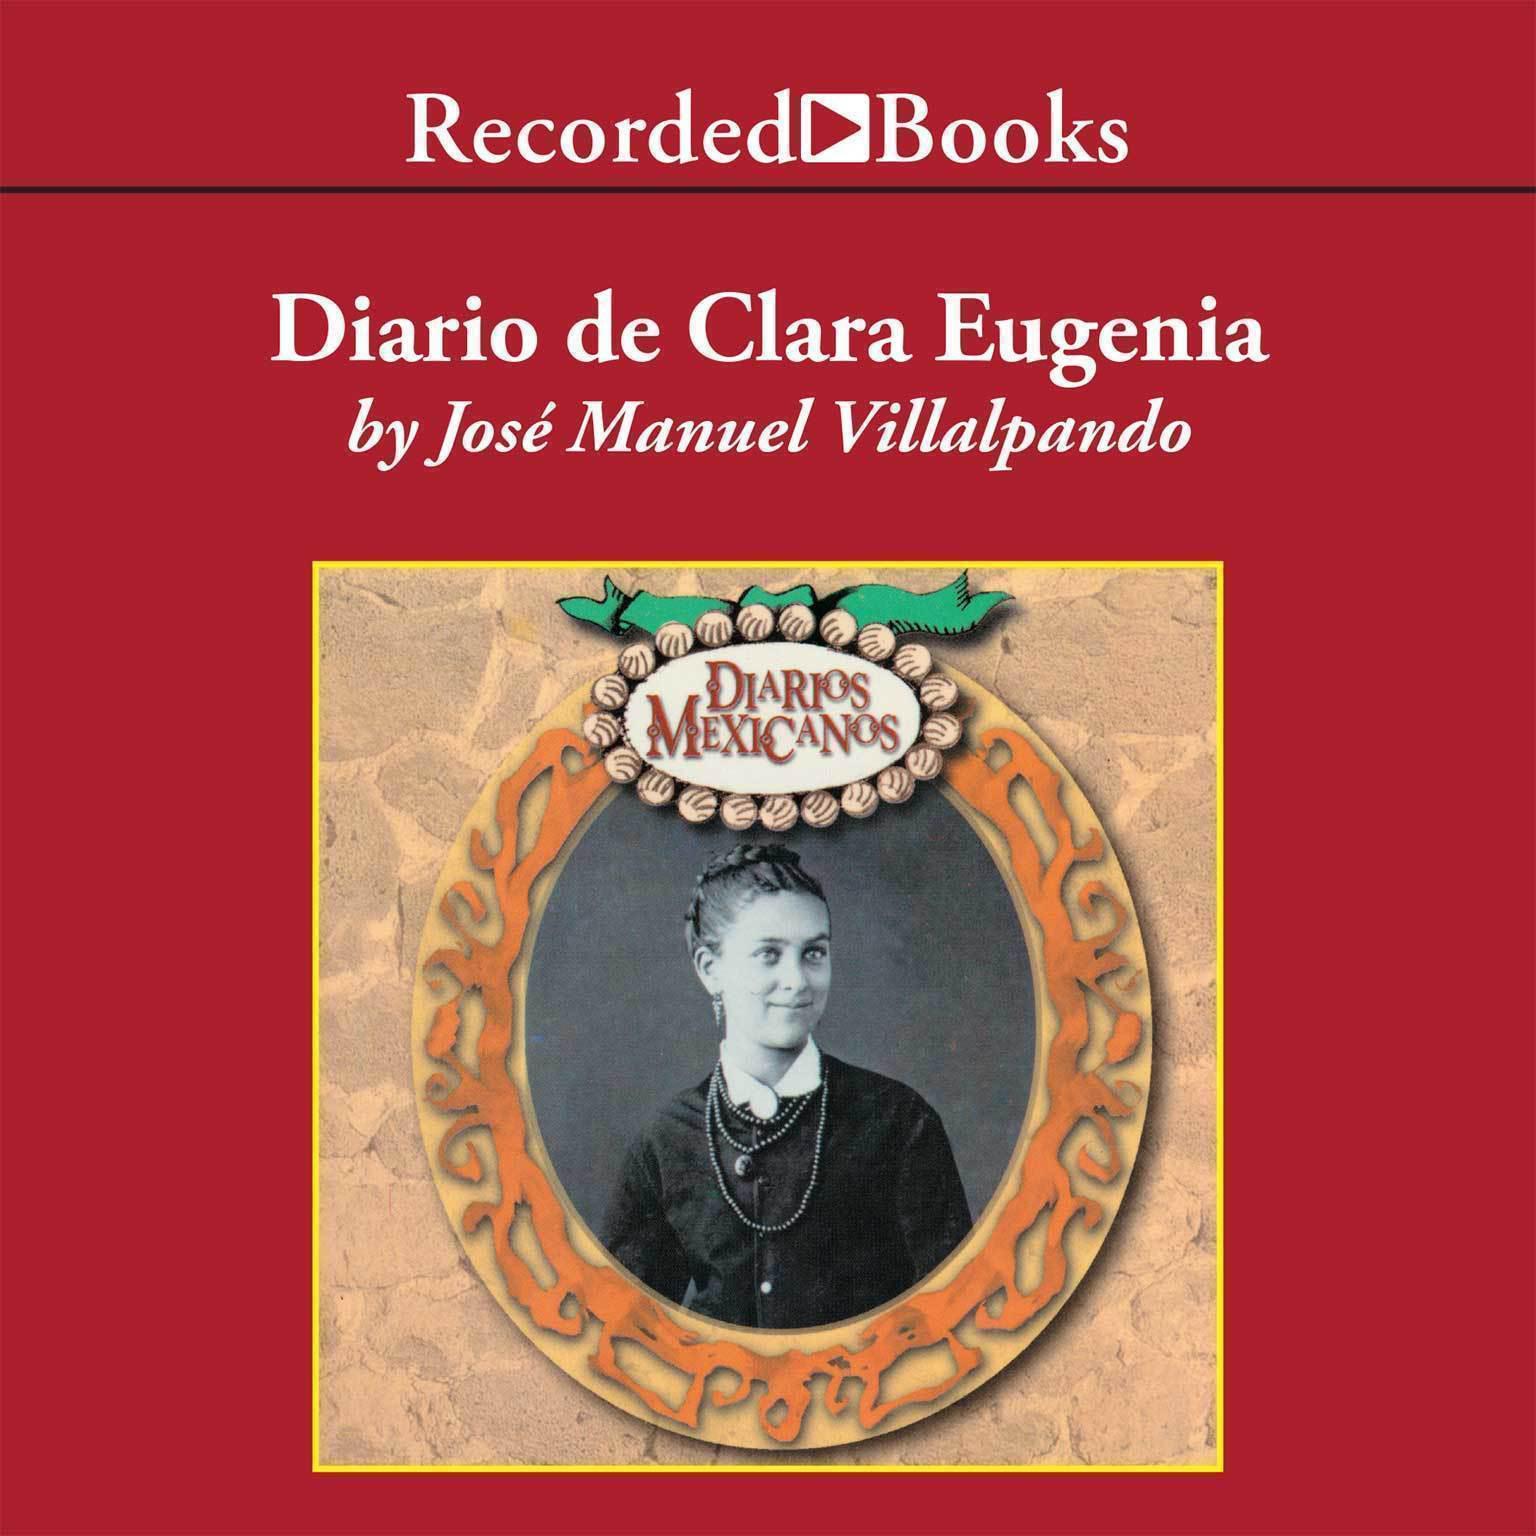 Diario de Clara Eugenia (Journal of Clara Eugenia) Audiobook, by José Manuel Villalpando